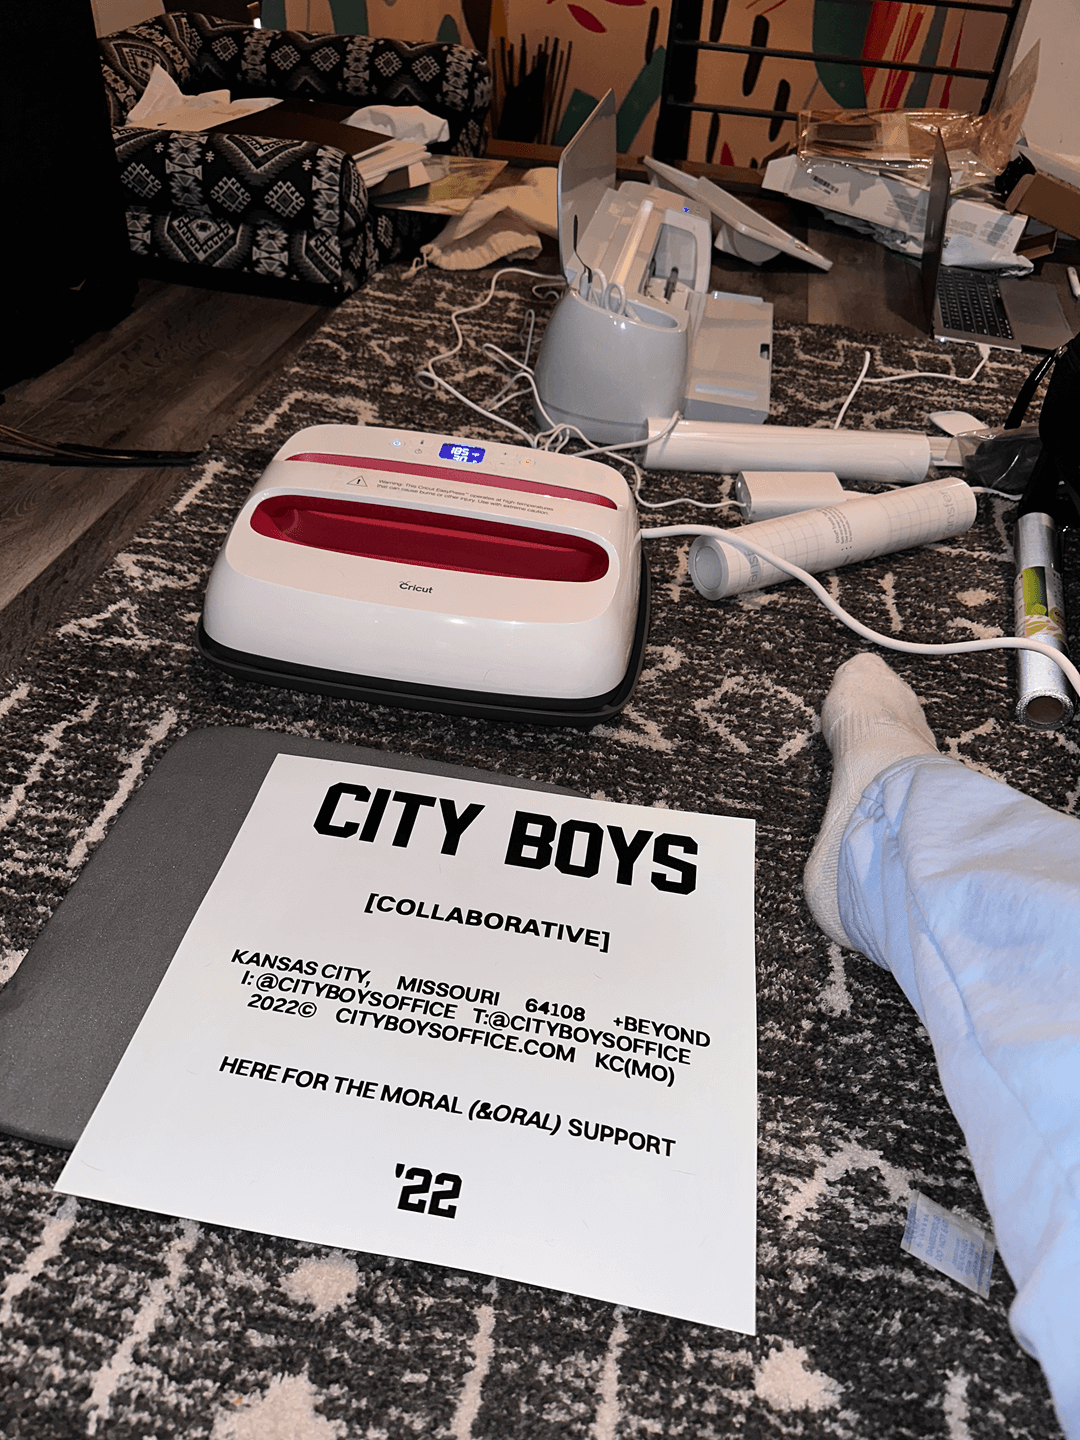 City Boys